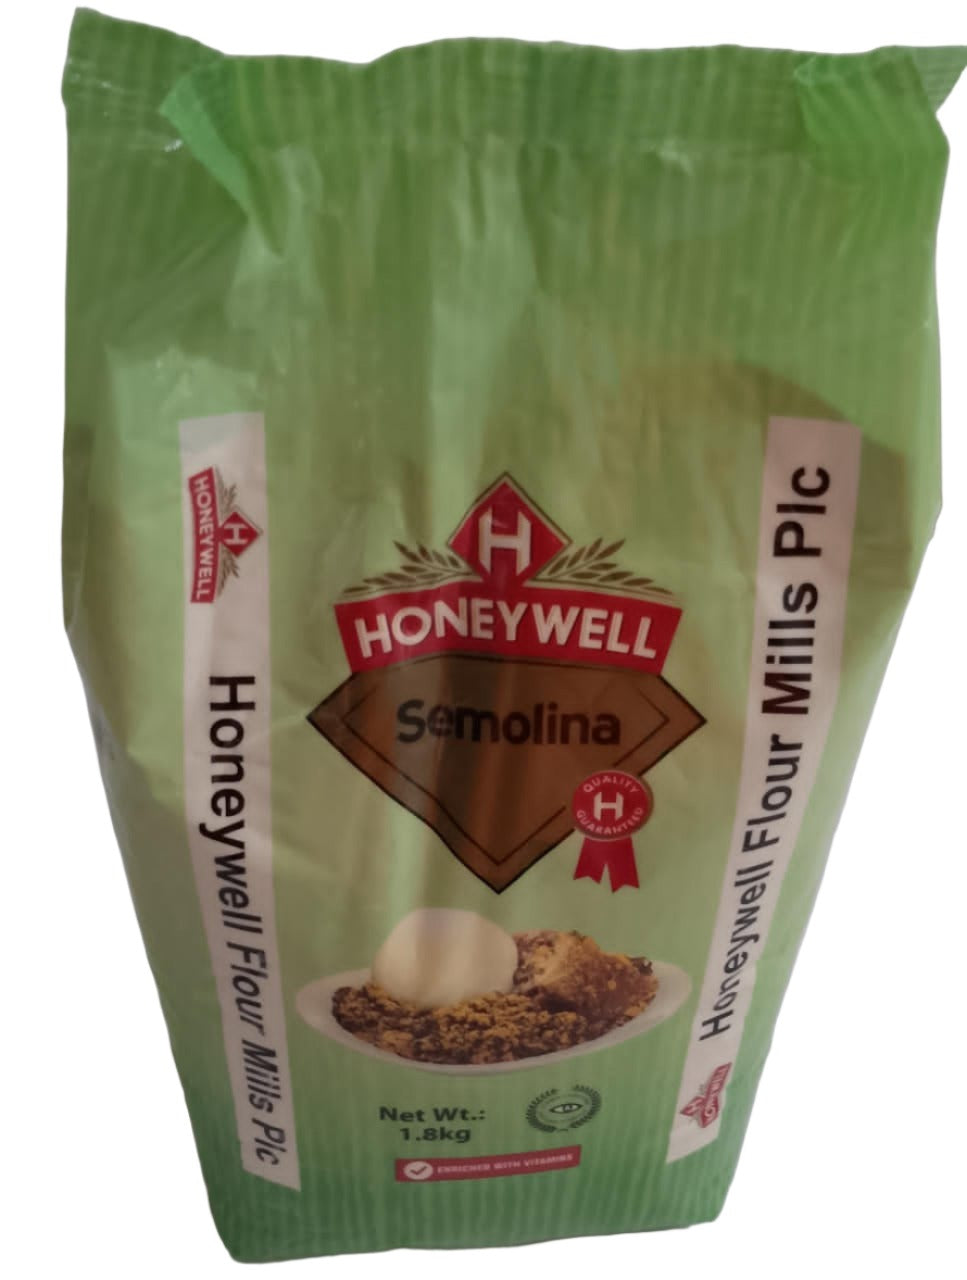 Best Selling Honeywell Semolina Flour Mills 1.8kg | DNF15a